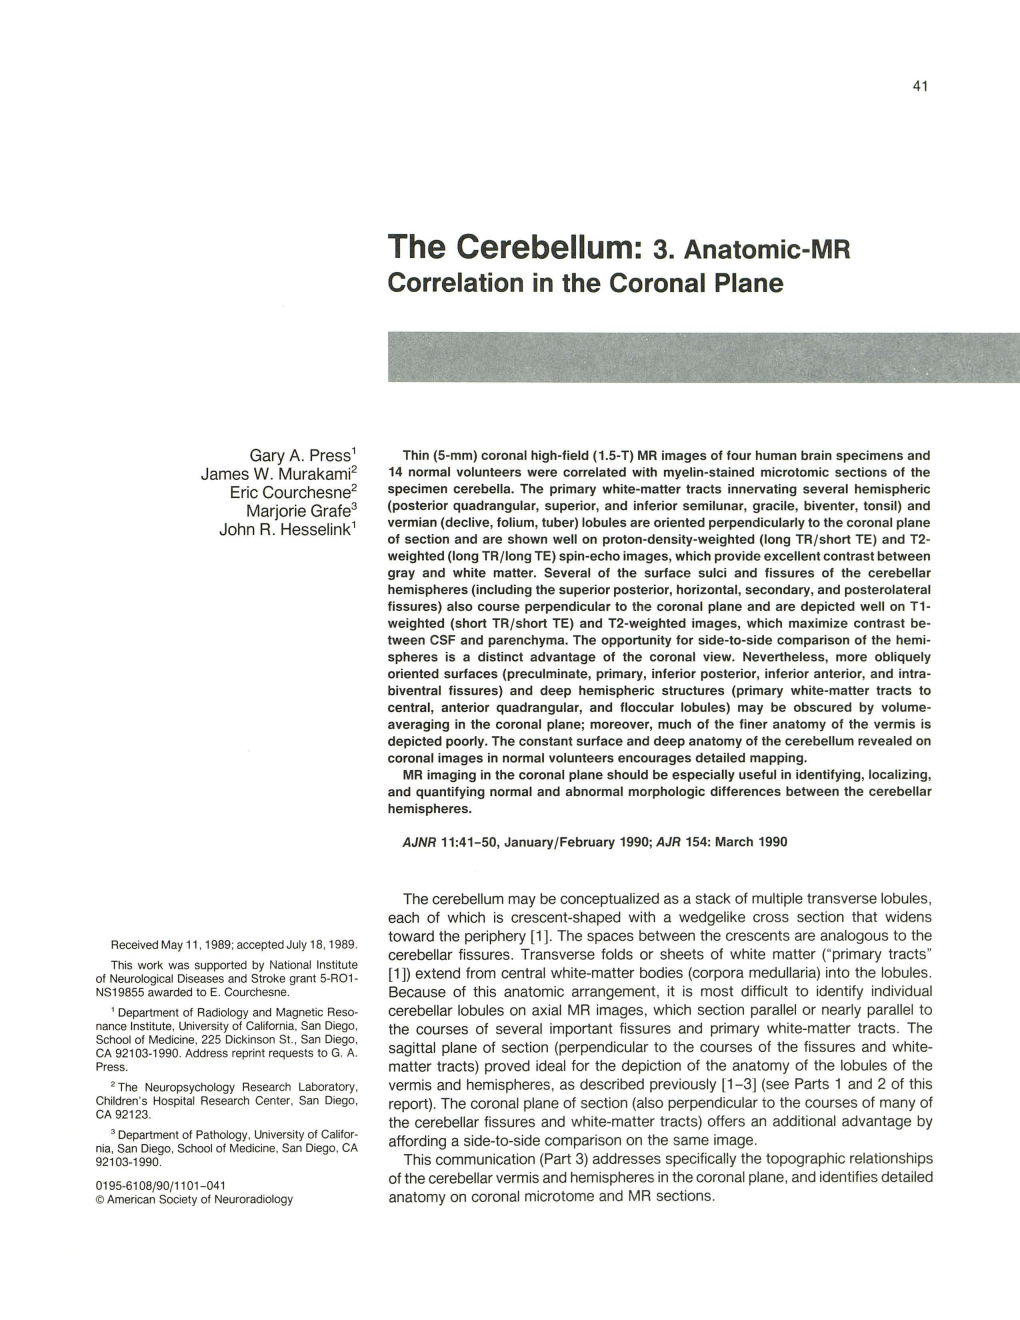 The Cerebellum: 3